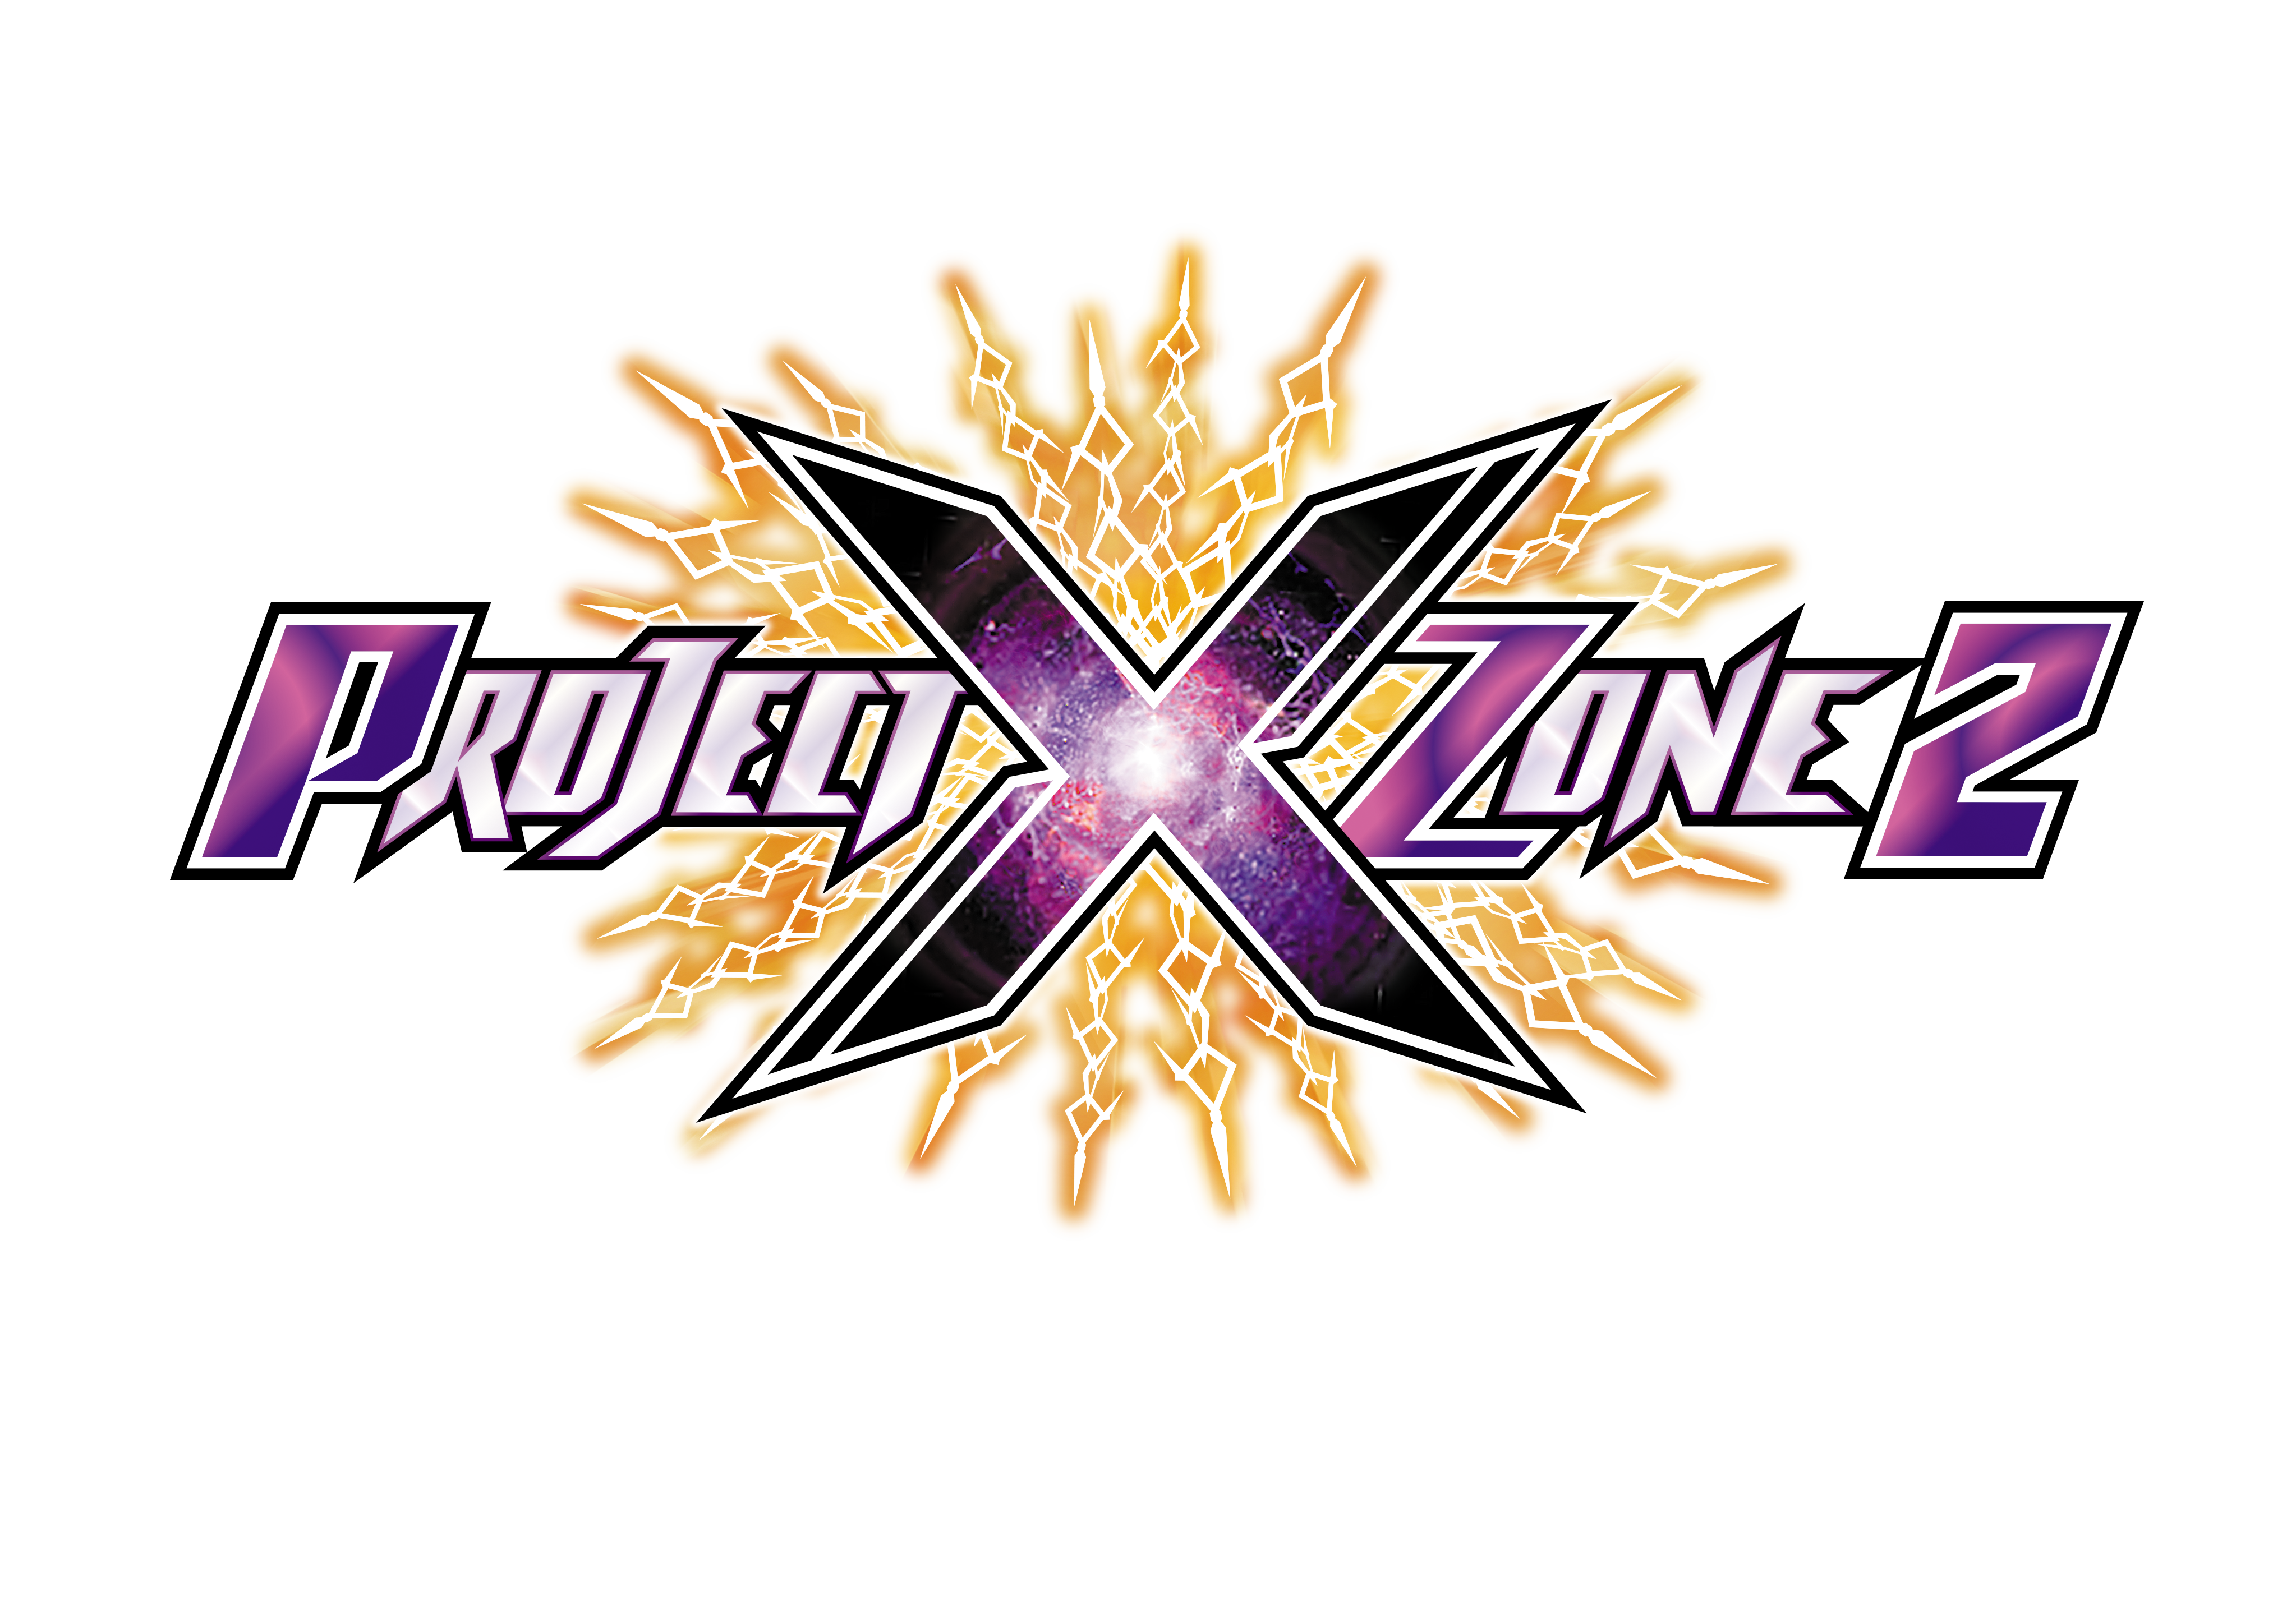 Project X Zone 2 - Logo